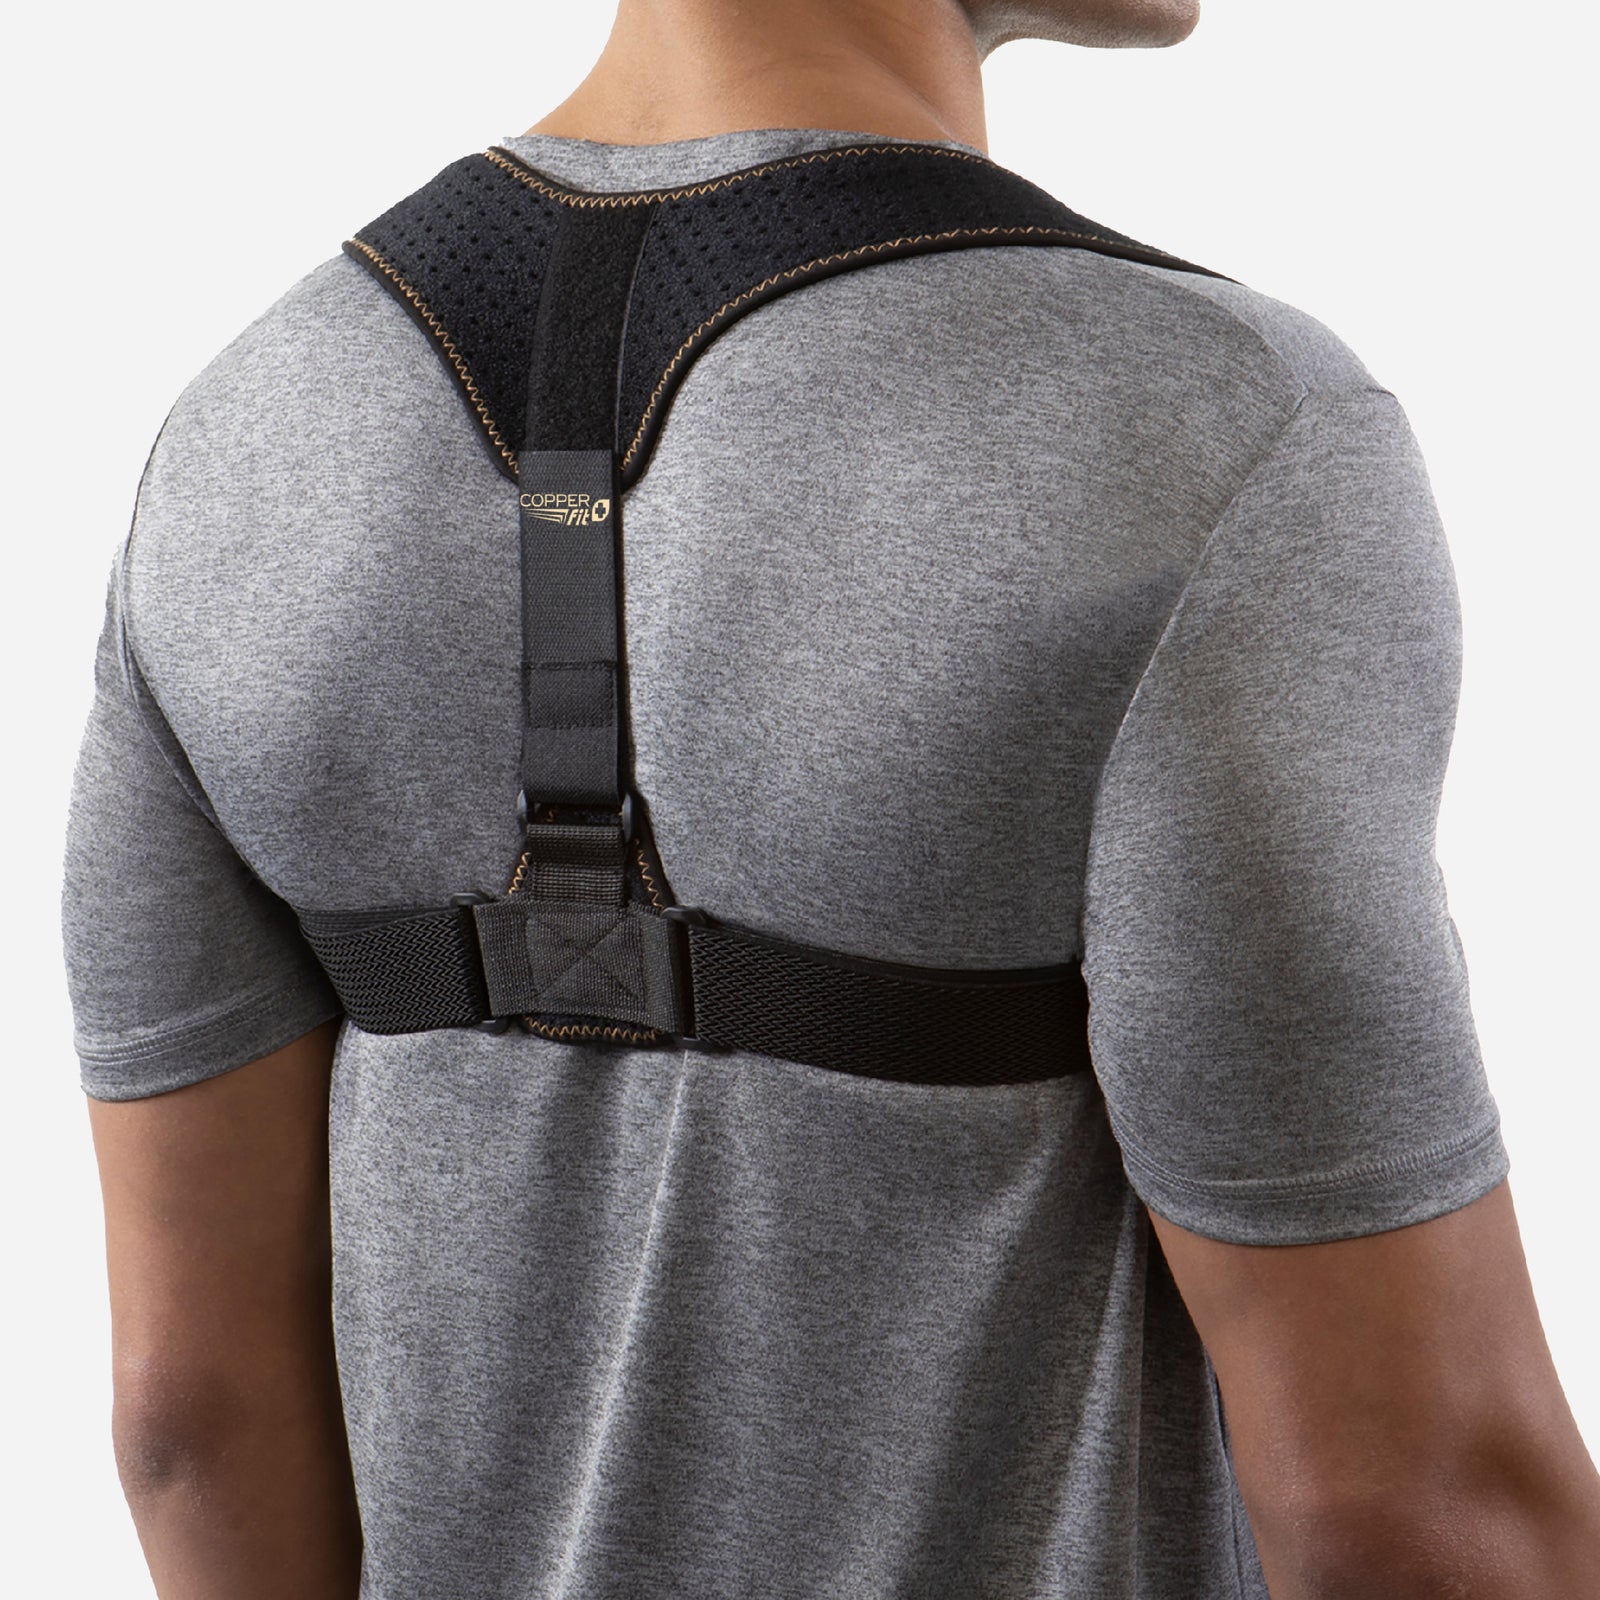 SHRBI Shoulder Support Strap Women Men Adjustable Shoulder Brace Strap  Rapid Relief Copper line Muscles Fit